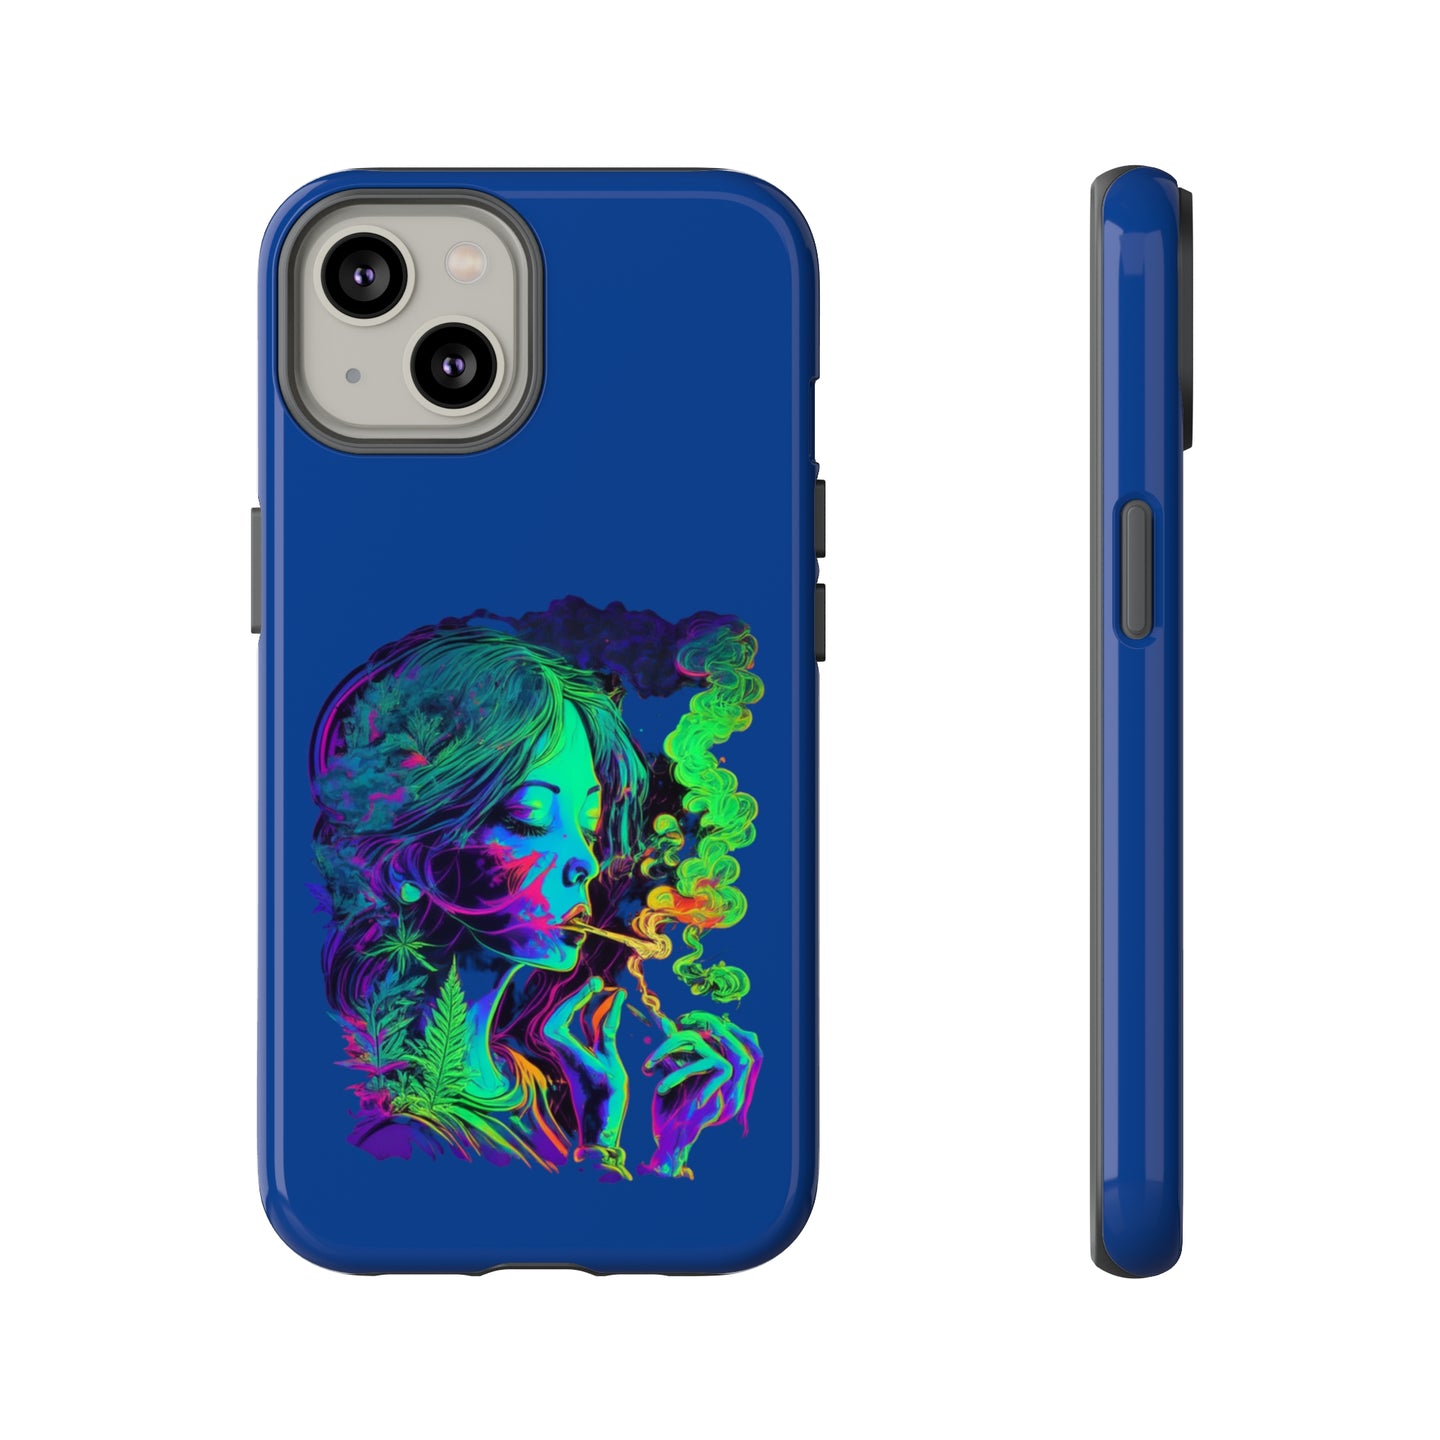 Grass-Fed - Blue - iPhone / Pixel / Galaxy